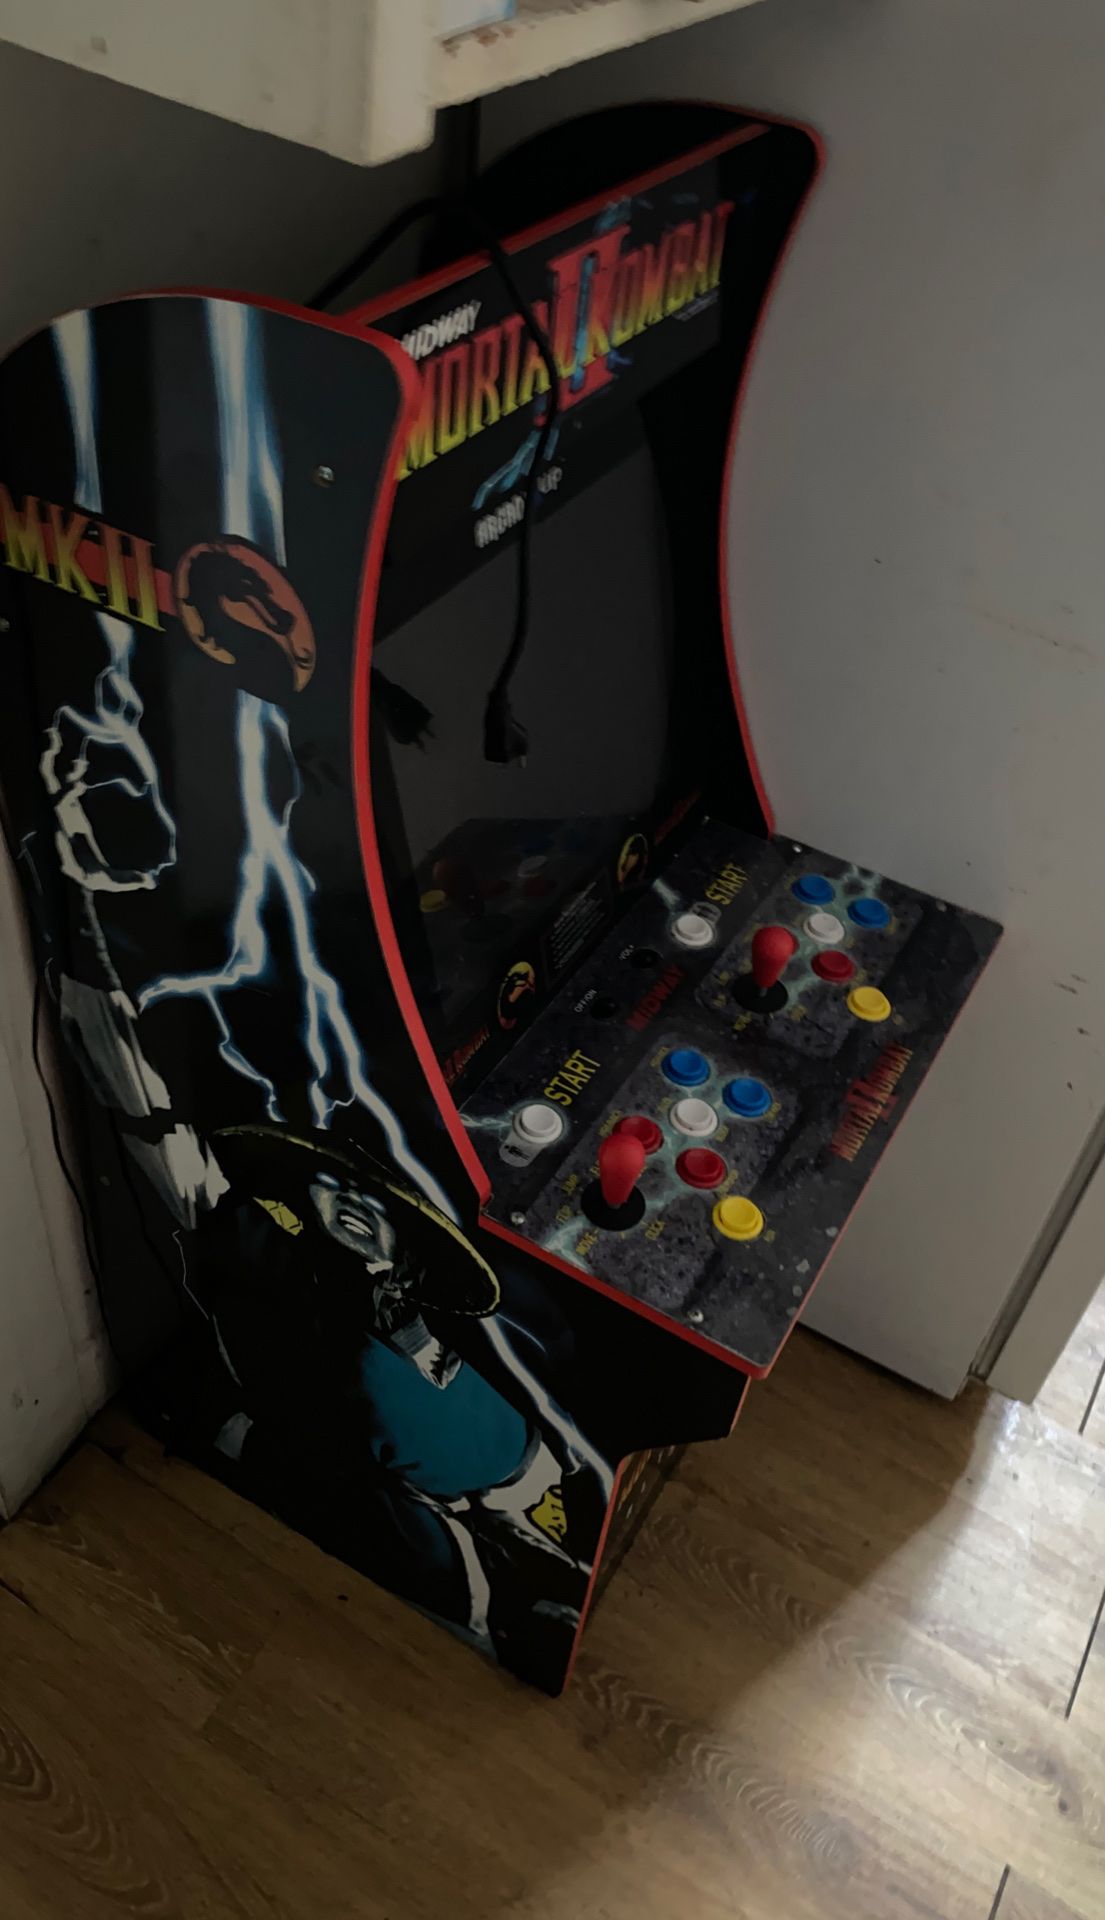 MK 2 arcade game